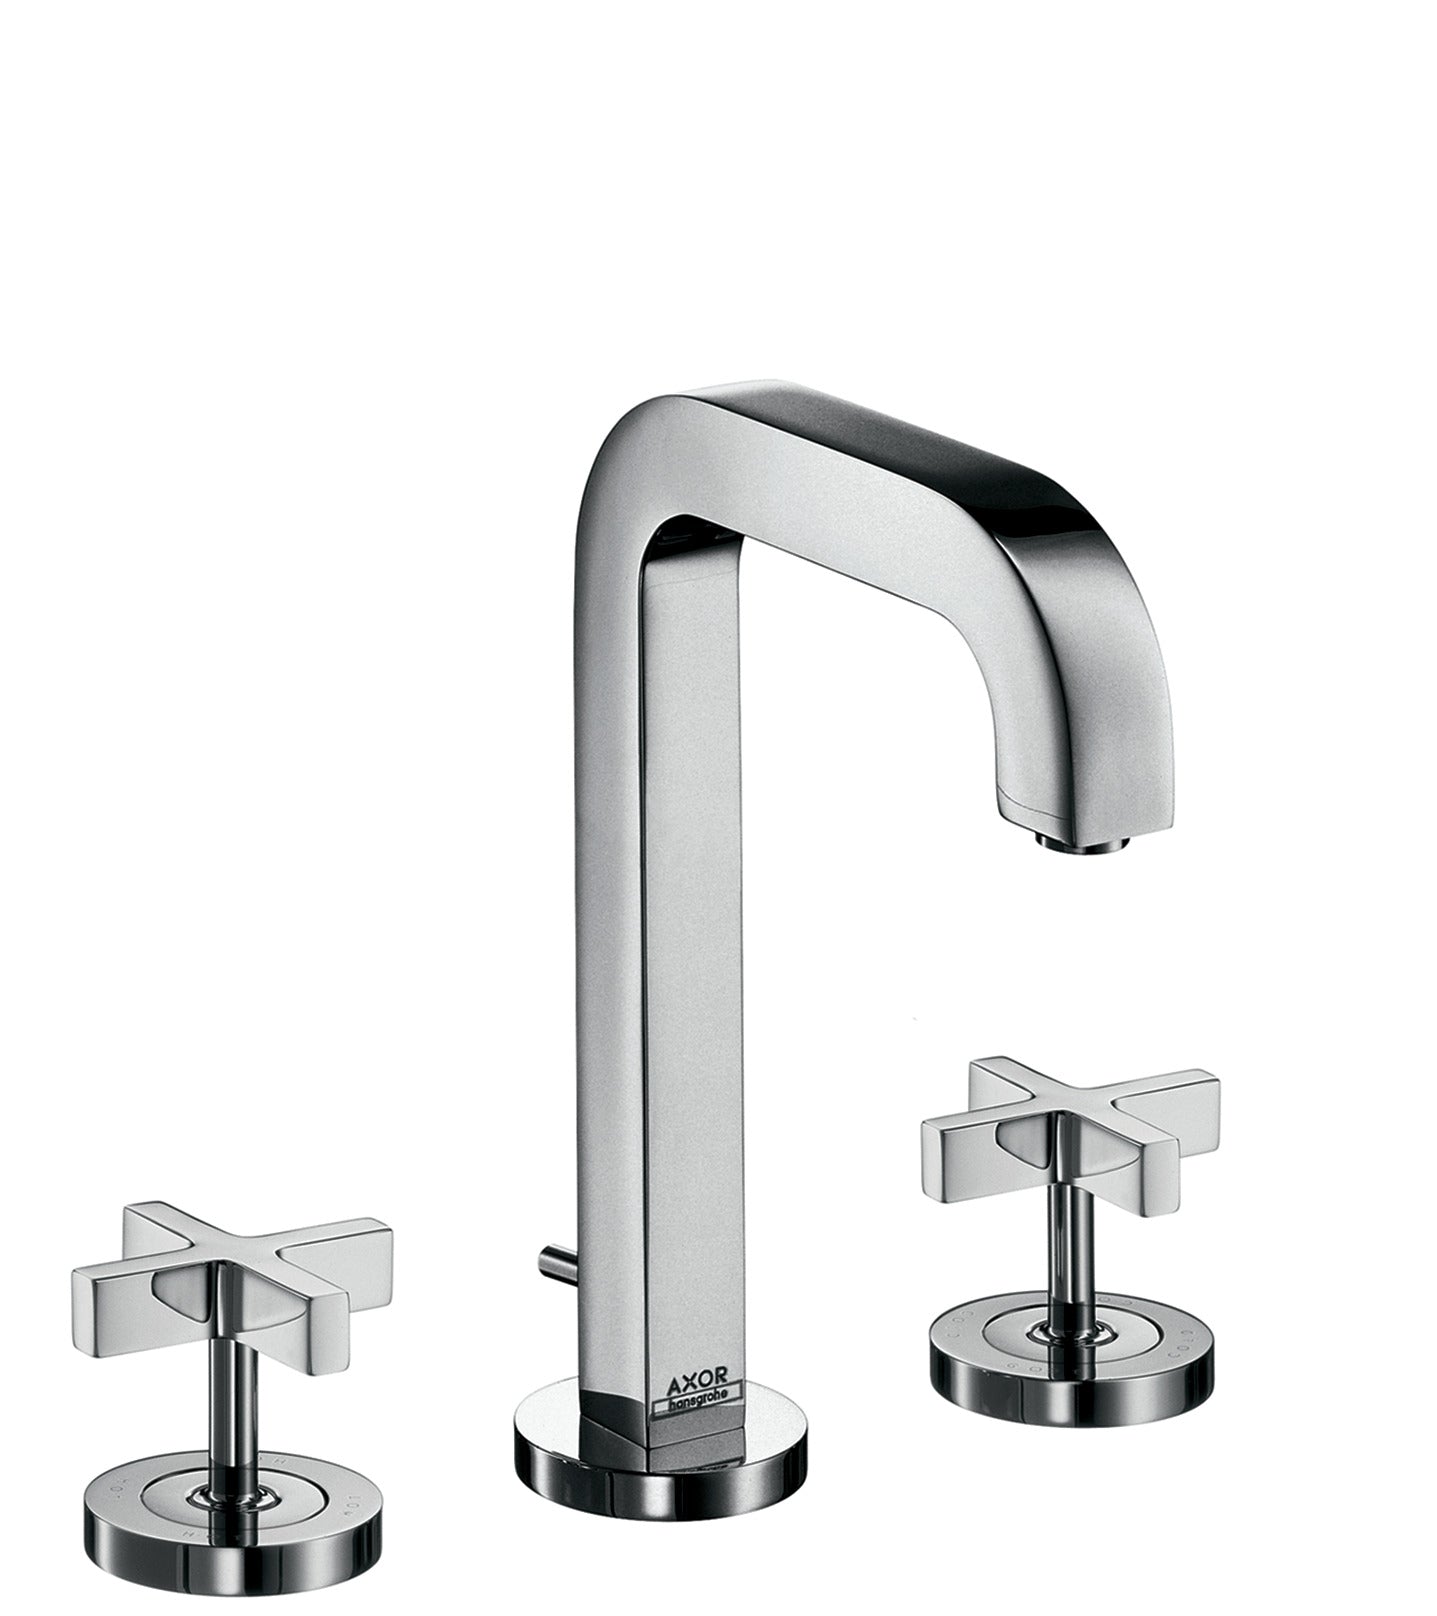 AXOR 39133001 Chrome Citterio Modern Widespread Bathroom Faucet 1.2 GPM